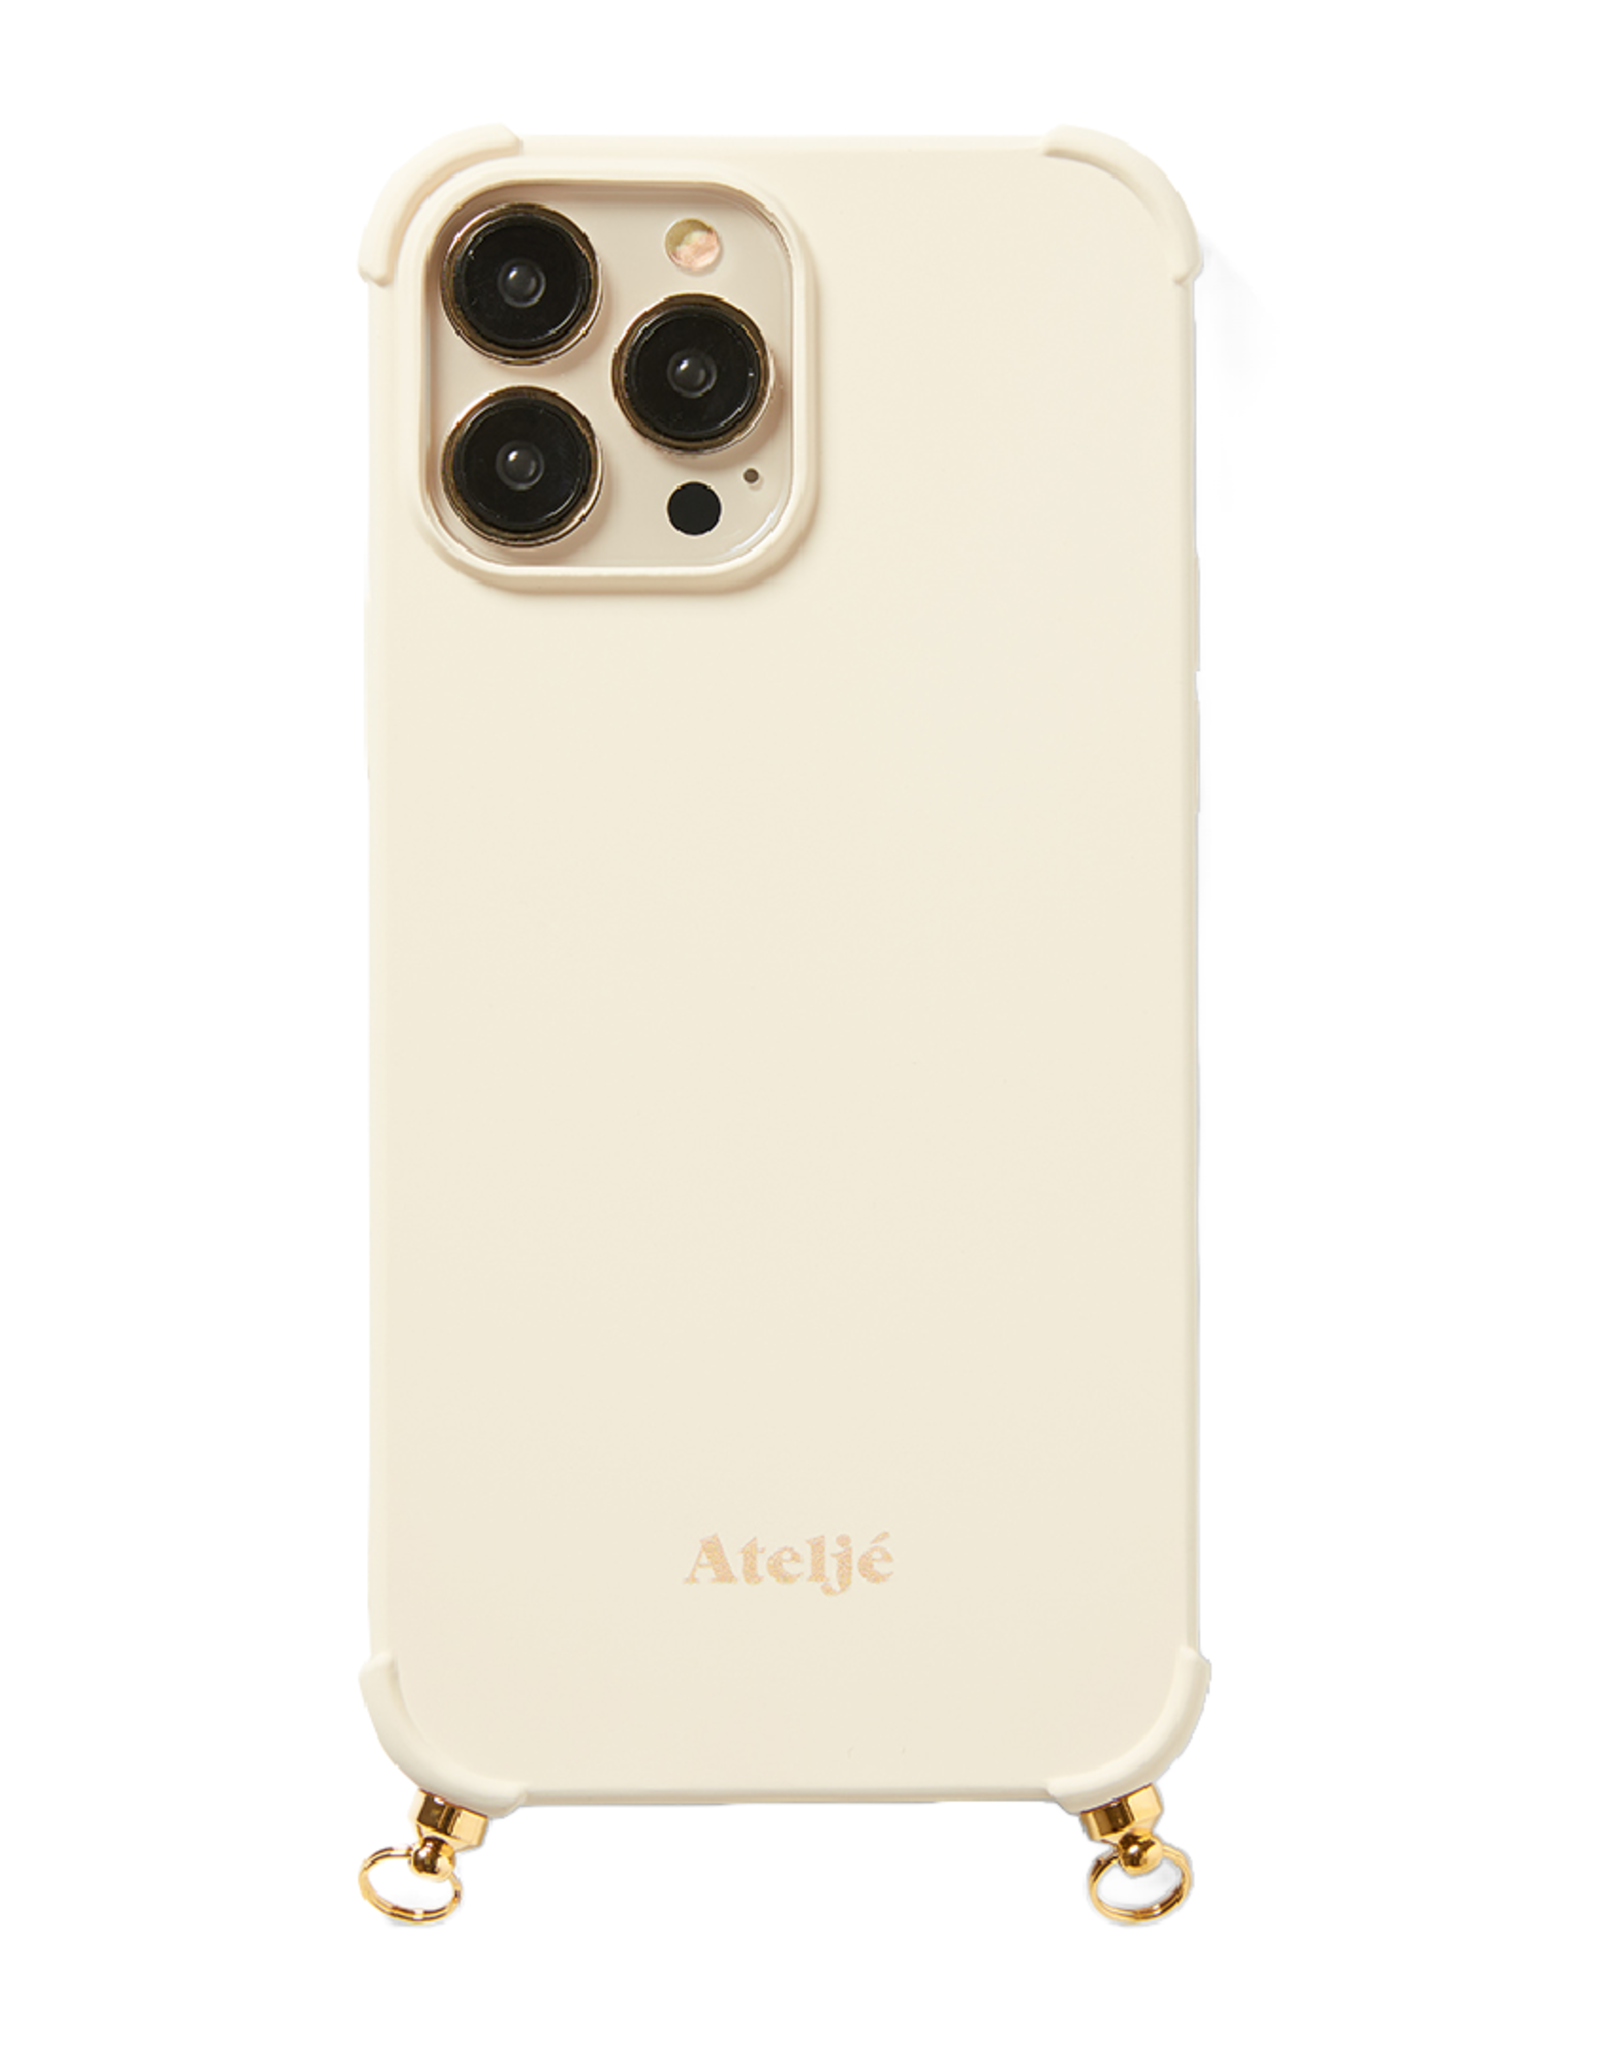 Ateljé iphone case - beige